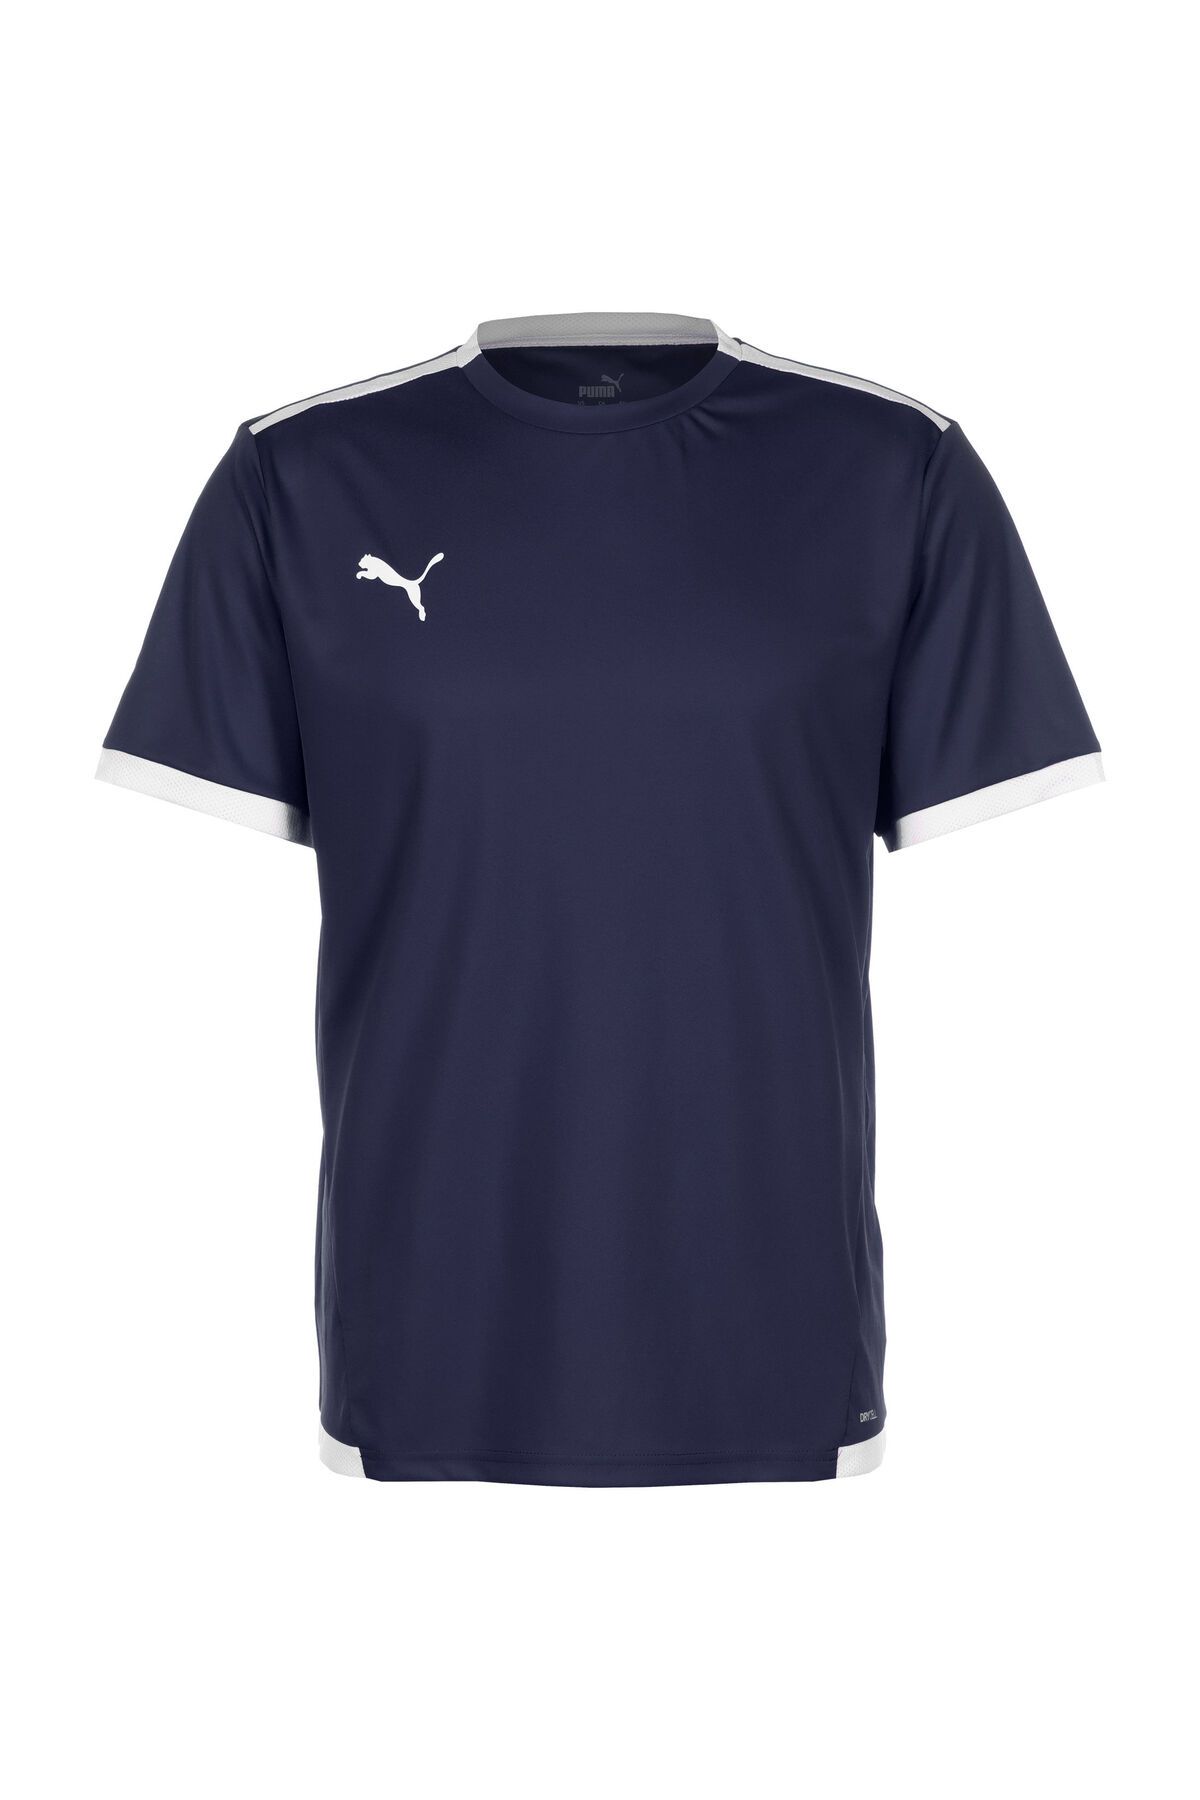 Puma T-Shirt - Blau - - Fit Regular Trendyol